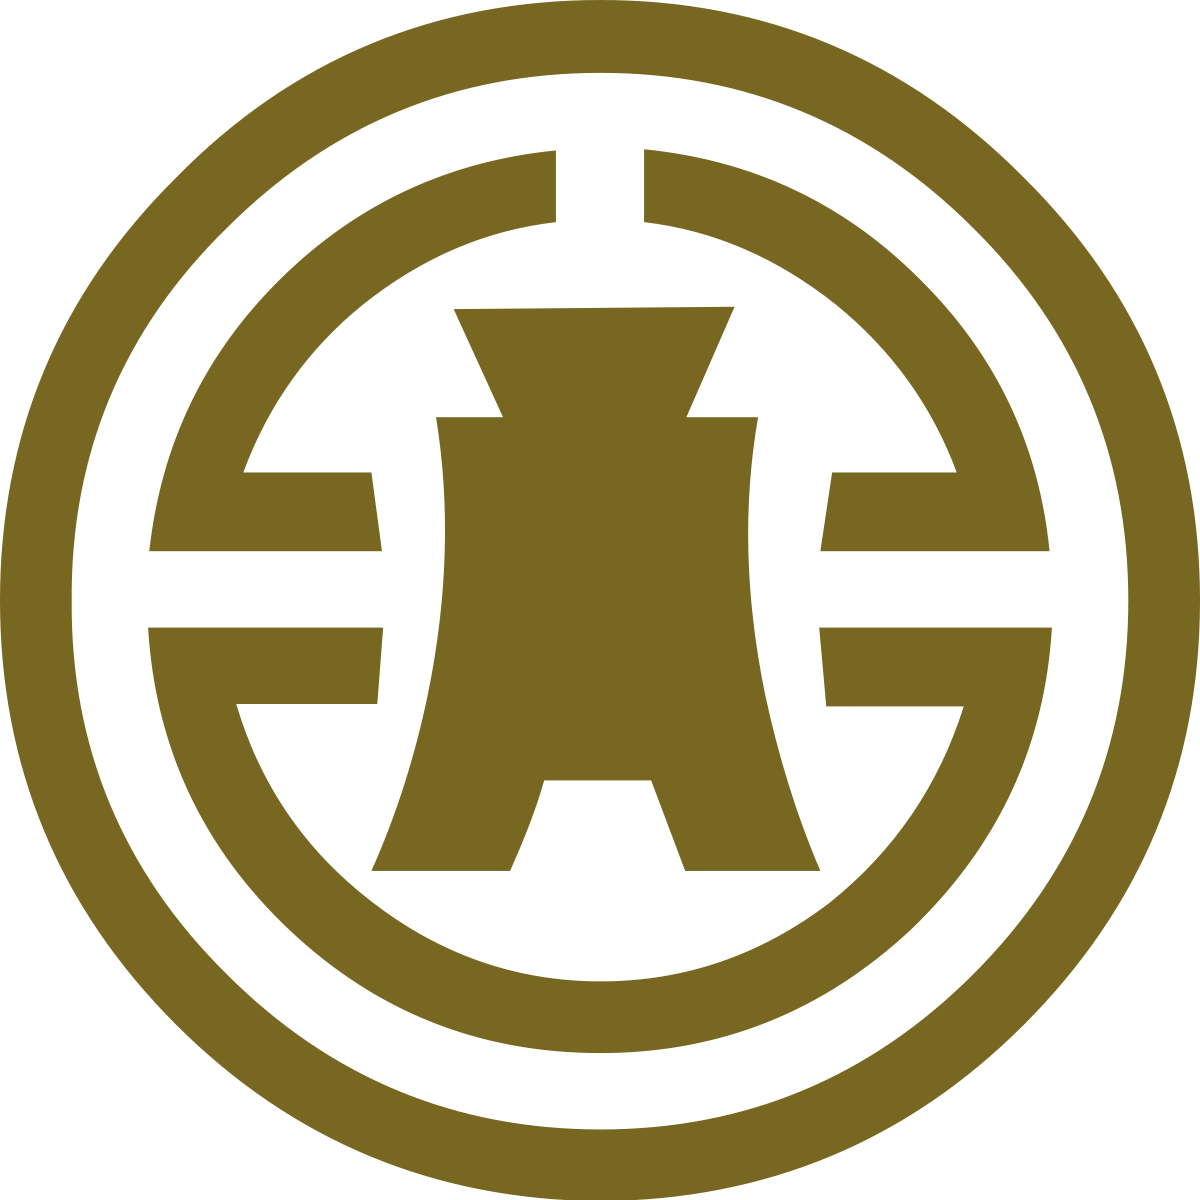 Taiwan National Emblem PNG image